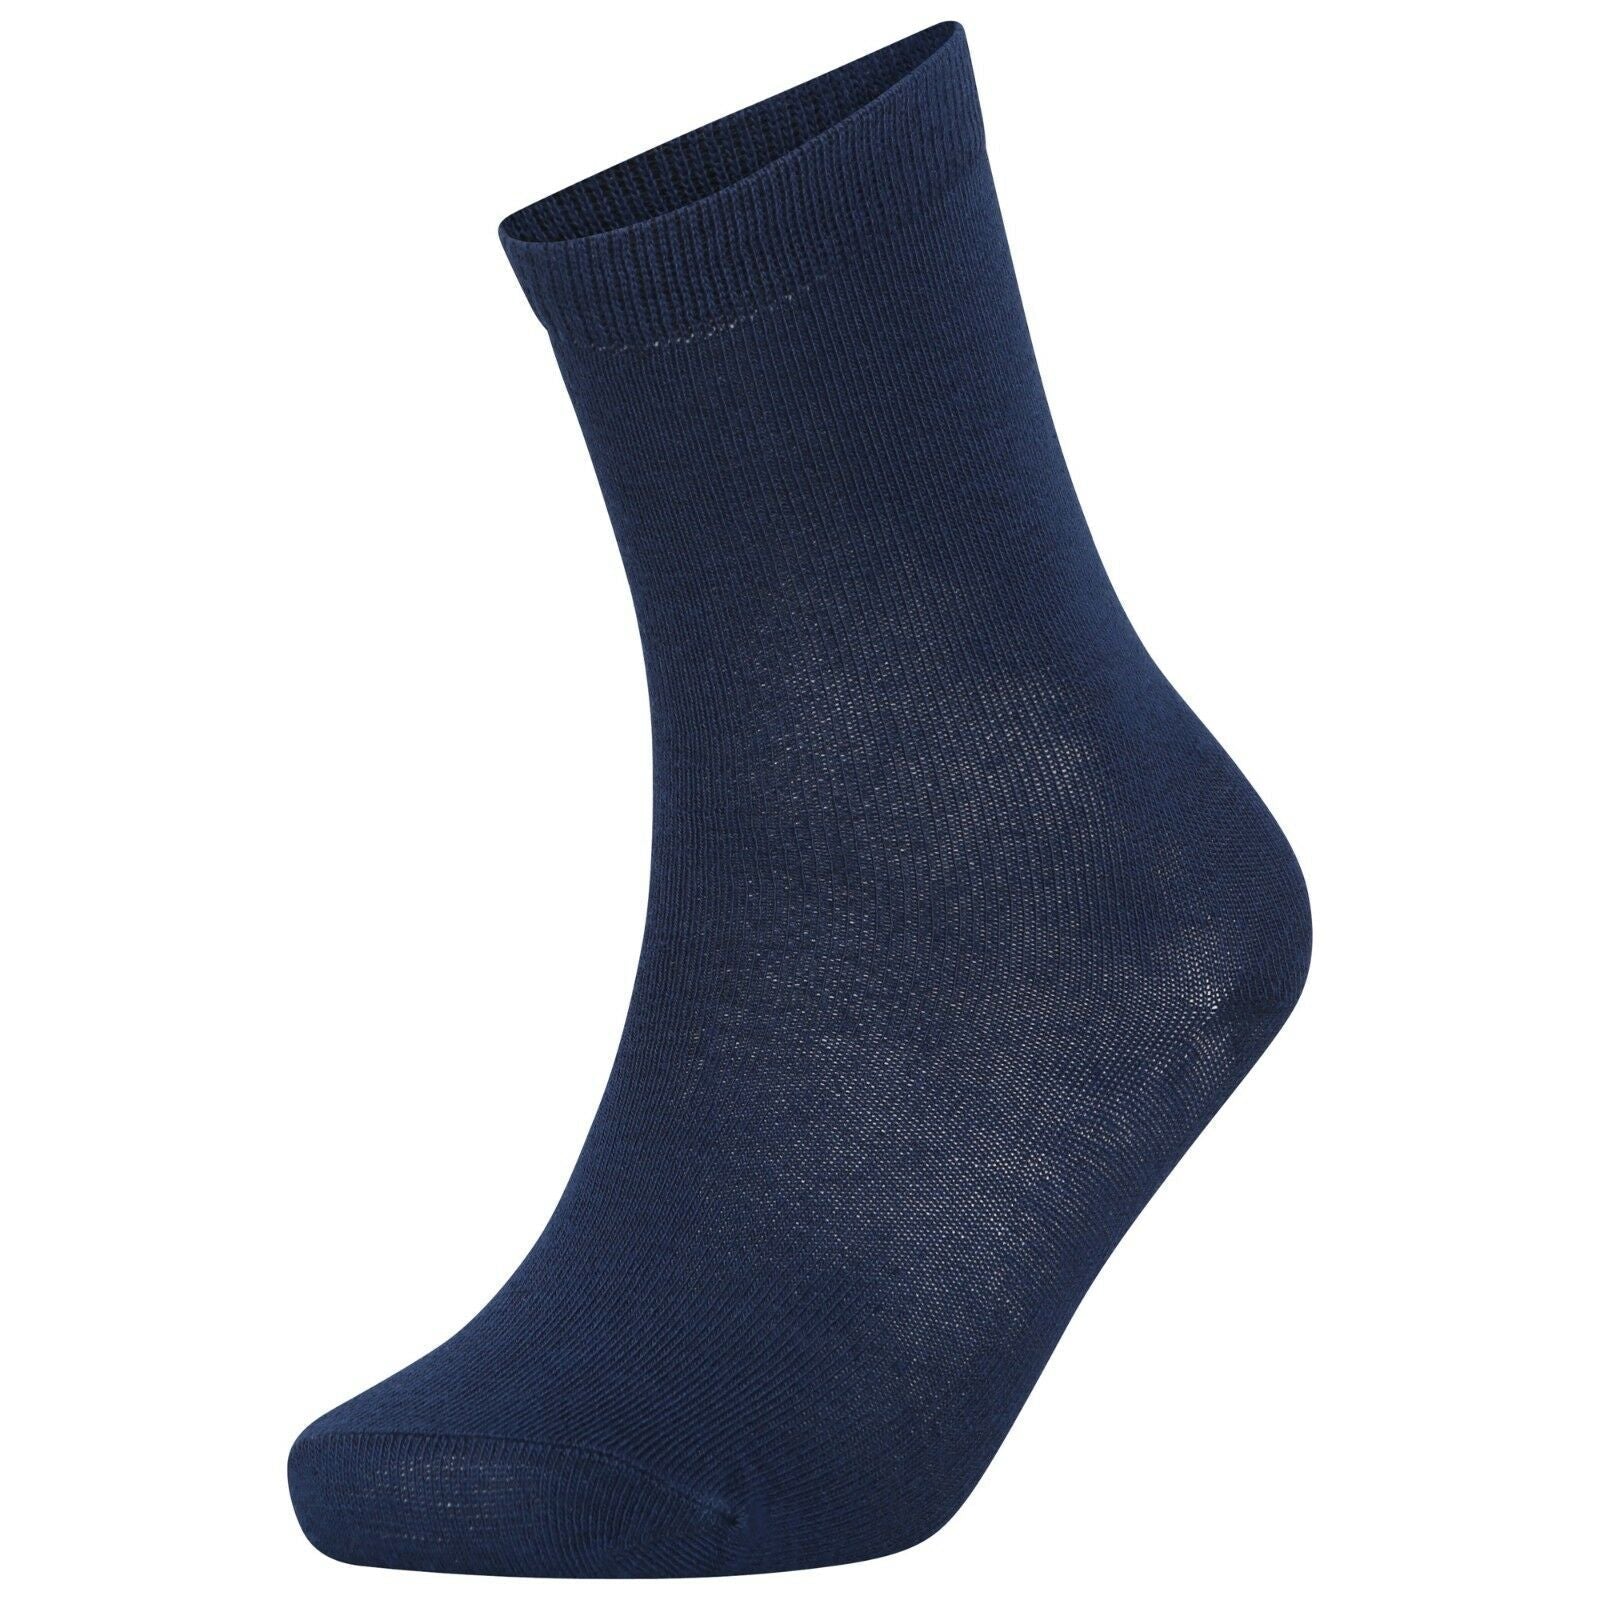 Girls Boys Unisex Children's Kids Ankle Socks Plain Cotton Mix  Back to School Socks 3 Pairs -Navy Blue